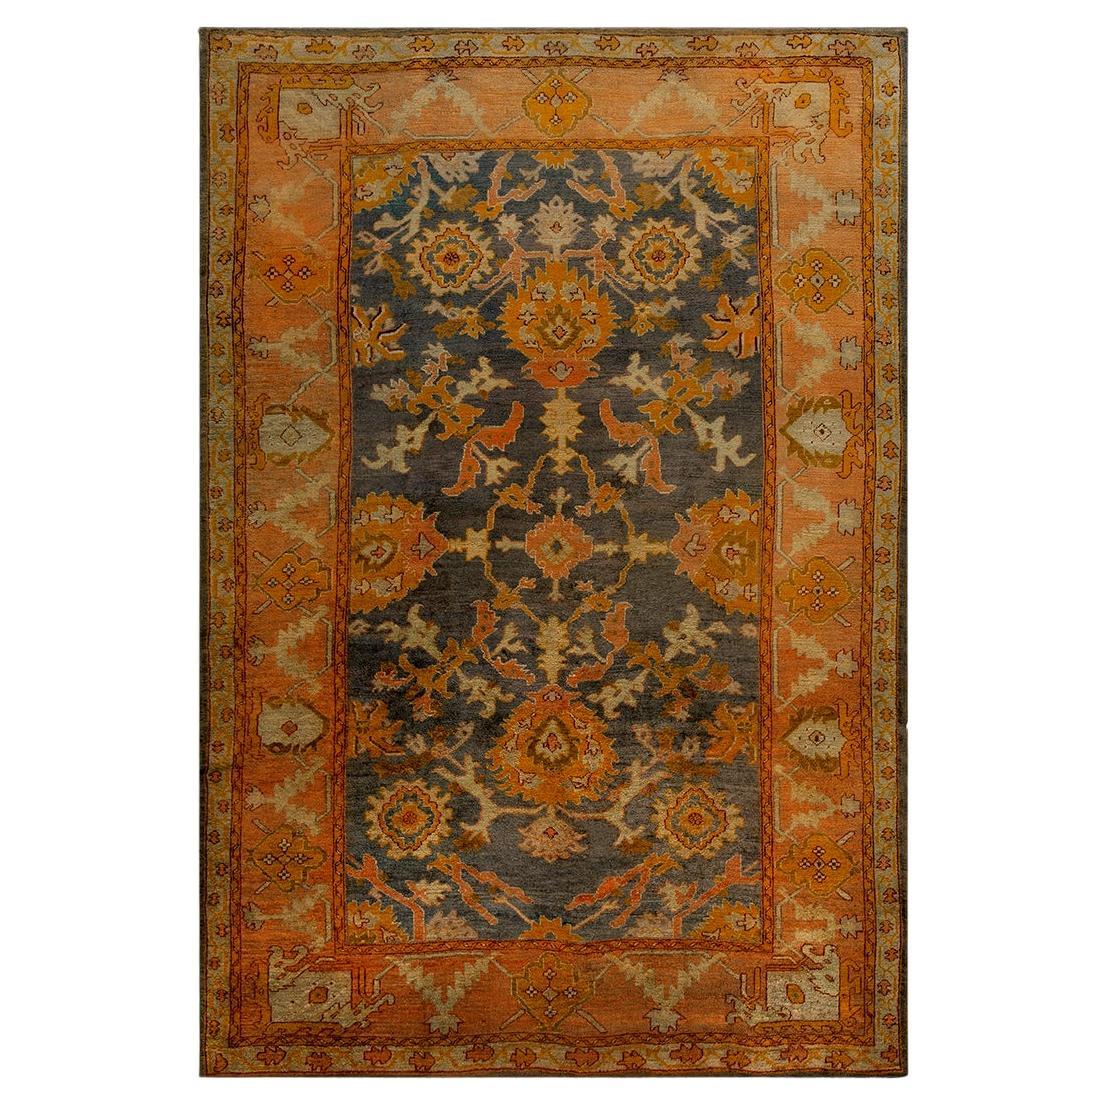 19th Century Turkish Oushak Carpet ( 8'3" x 12'4" - 252 x 376 ) For Sale